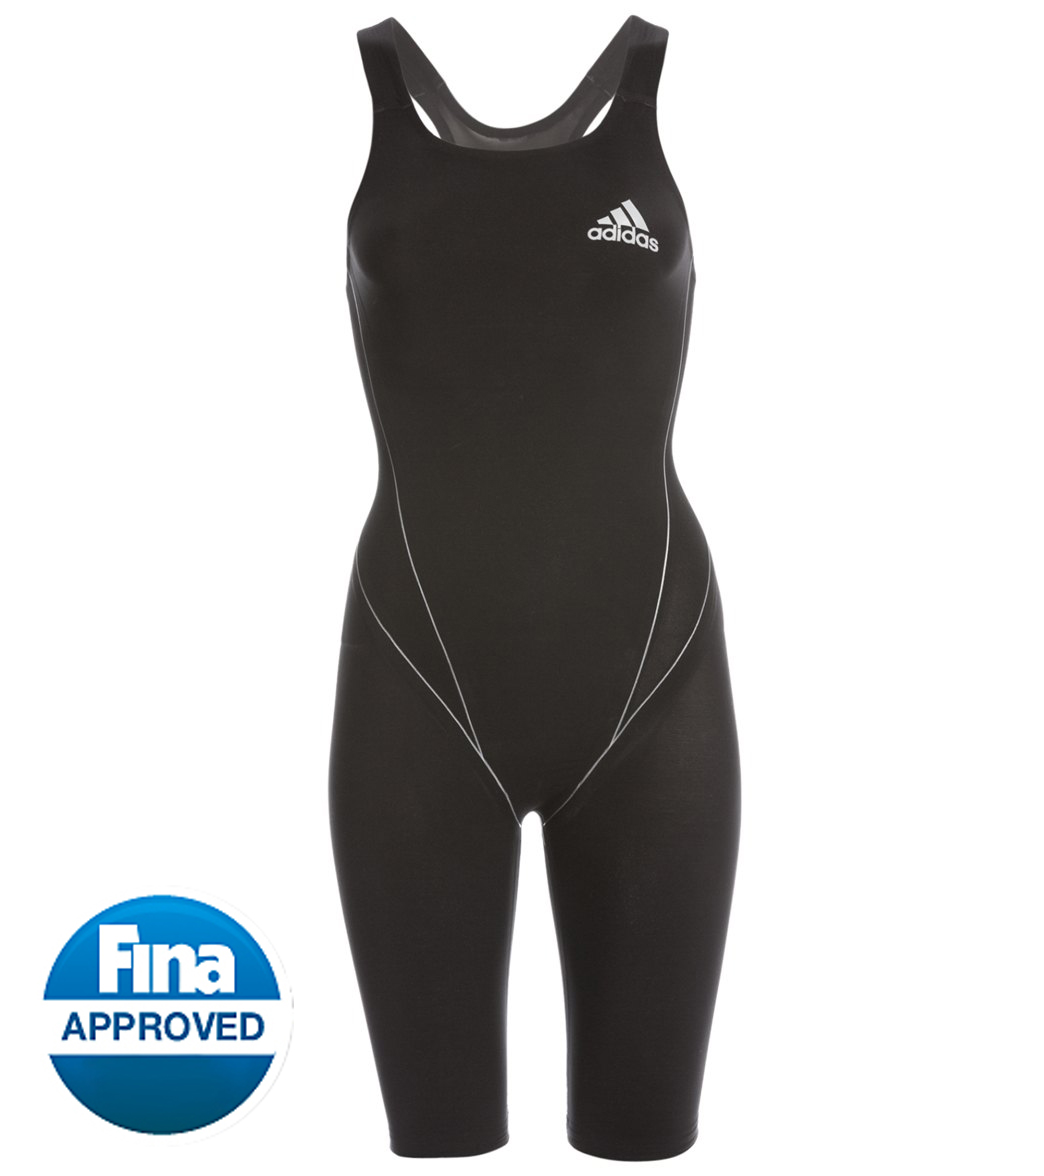 Adidas Women's Kneeskin Tech Suit at SwimOutlet.com - Free Shipping